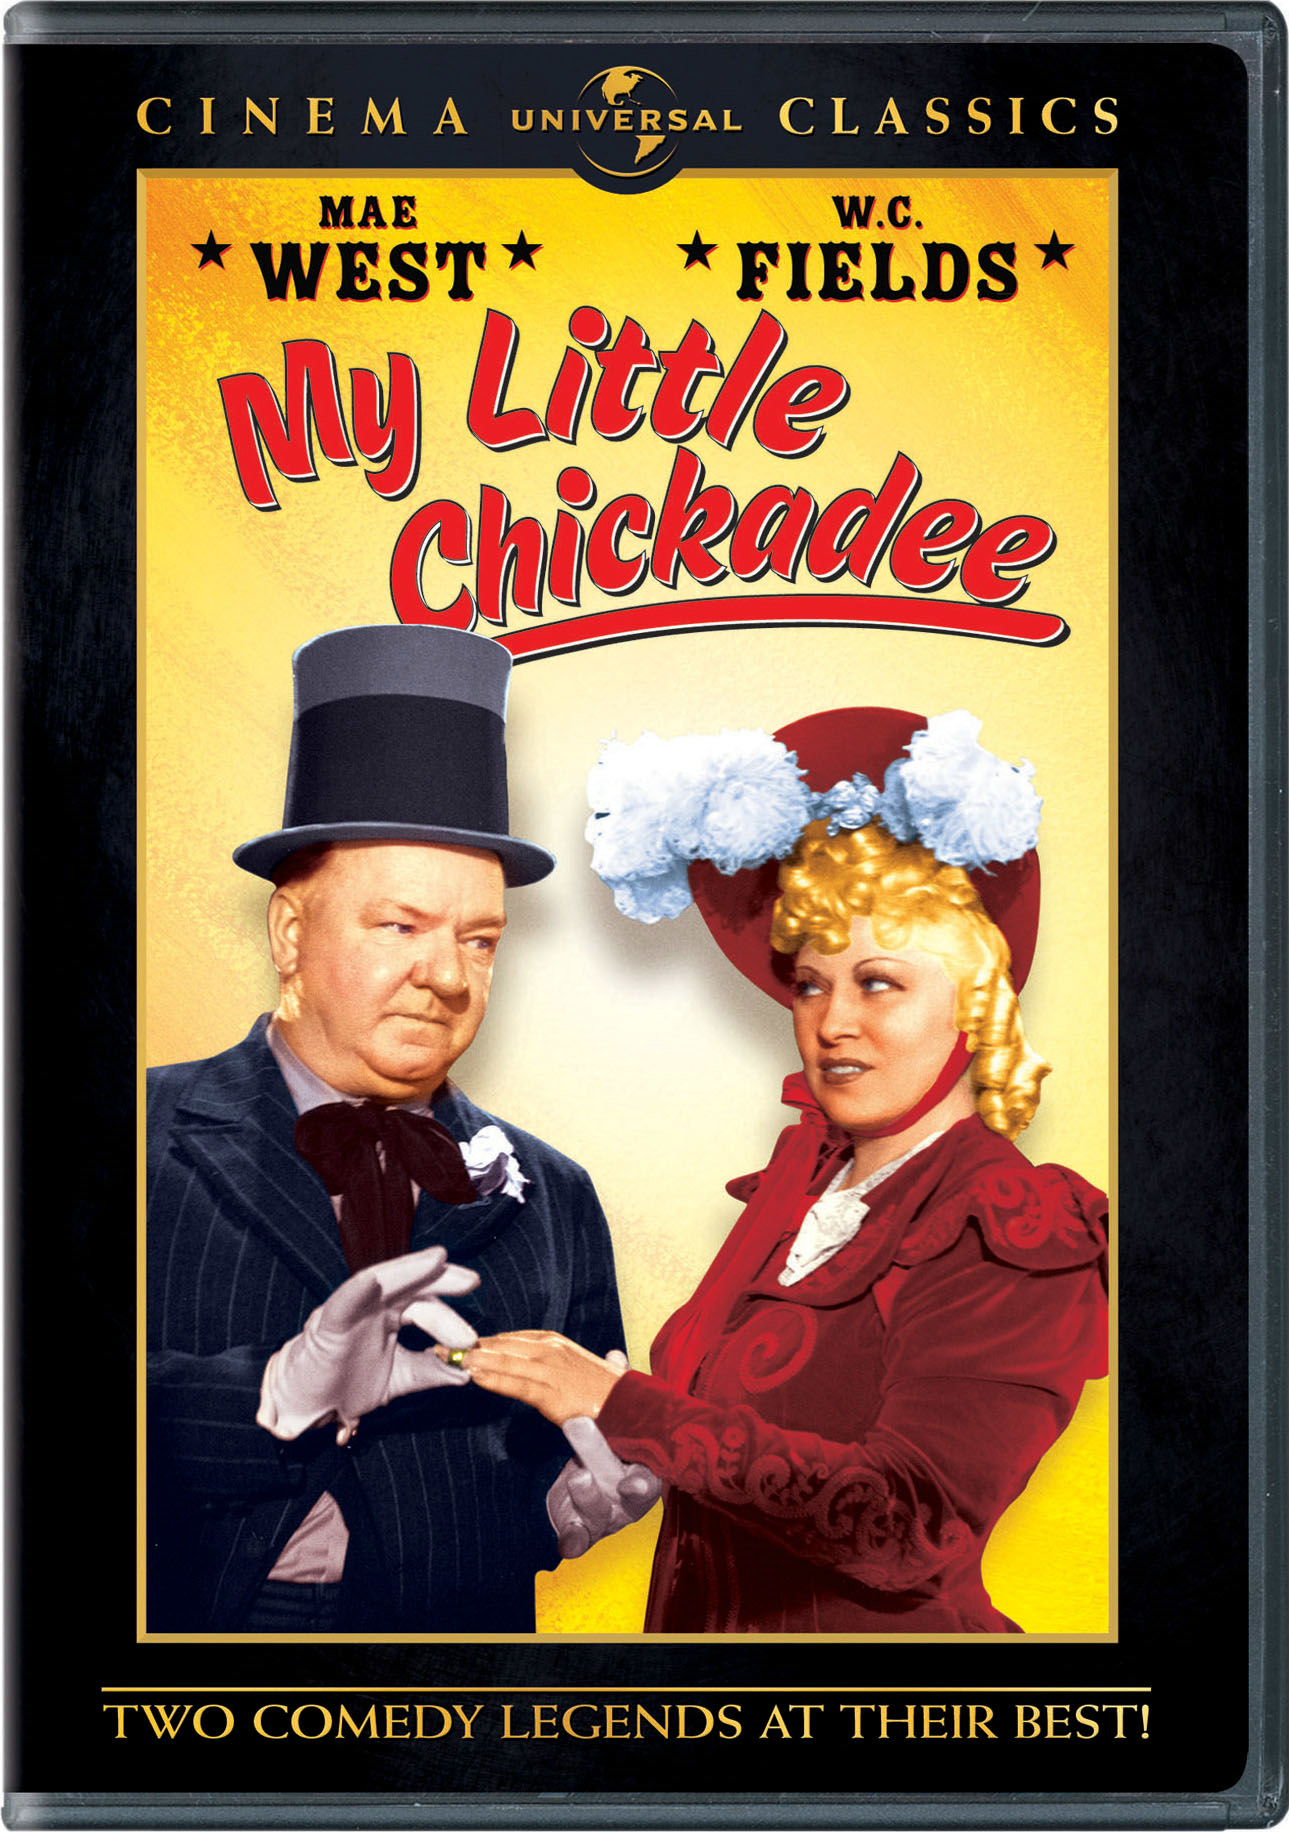 My Little Chickadee - DVD [ 1940 ]  - Classic Movies On DVD - Movies On GRUV